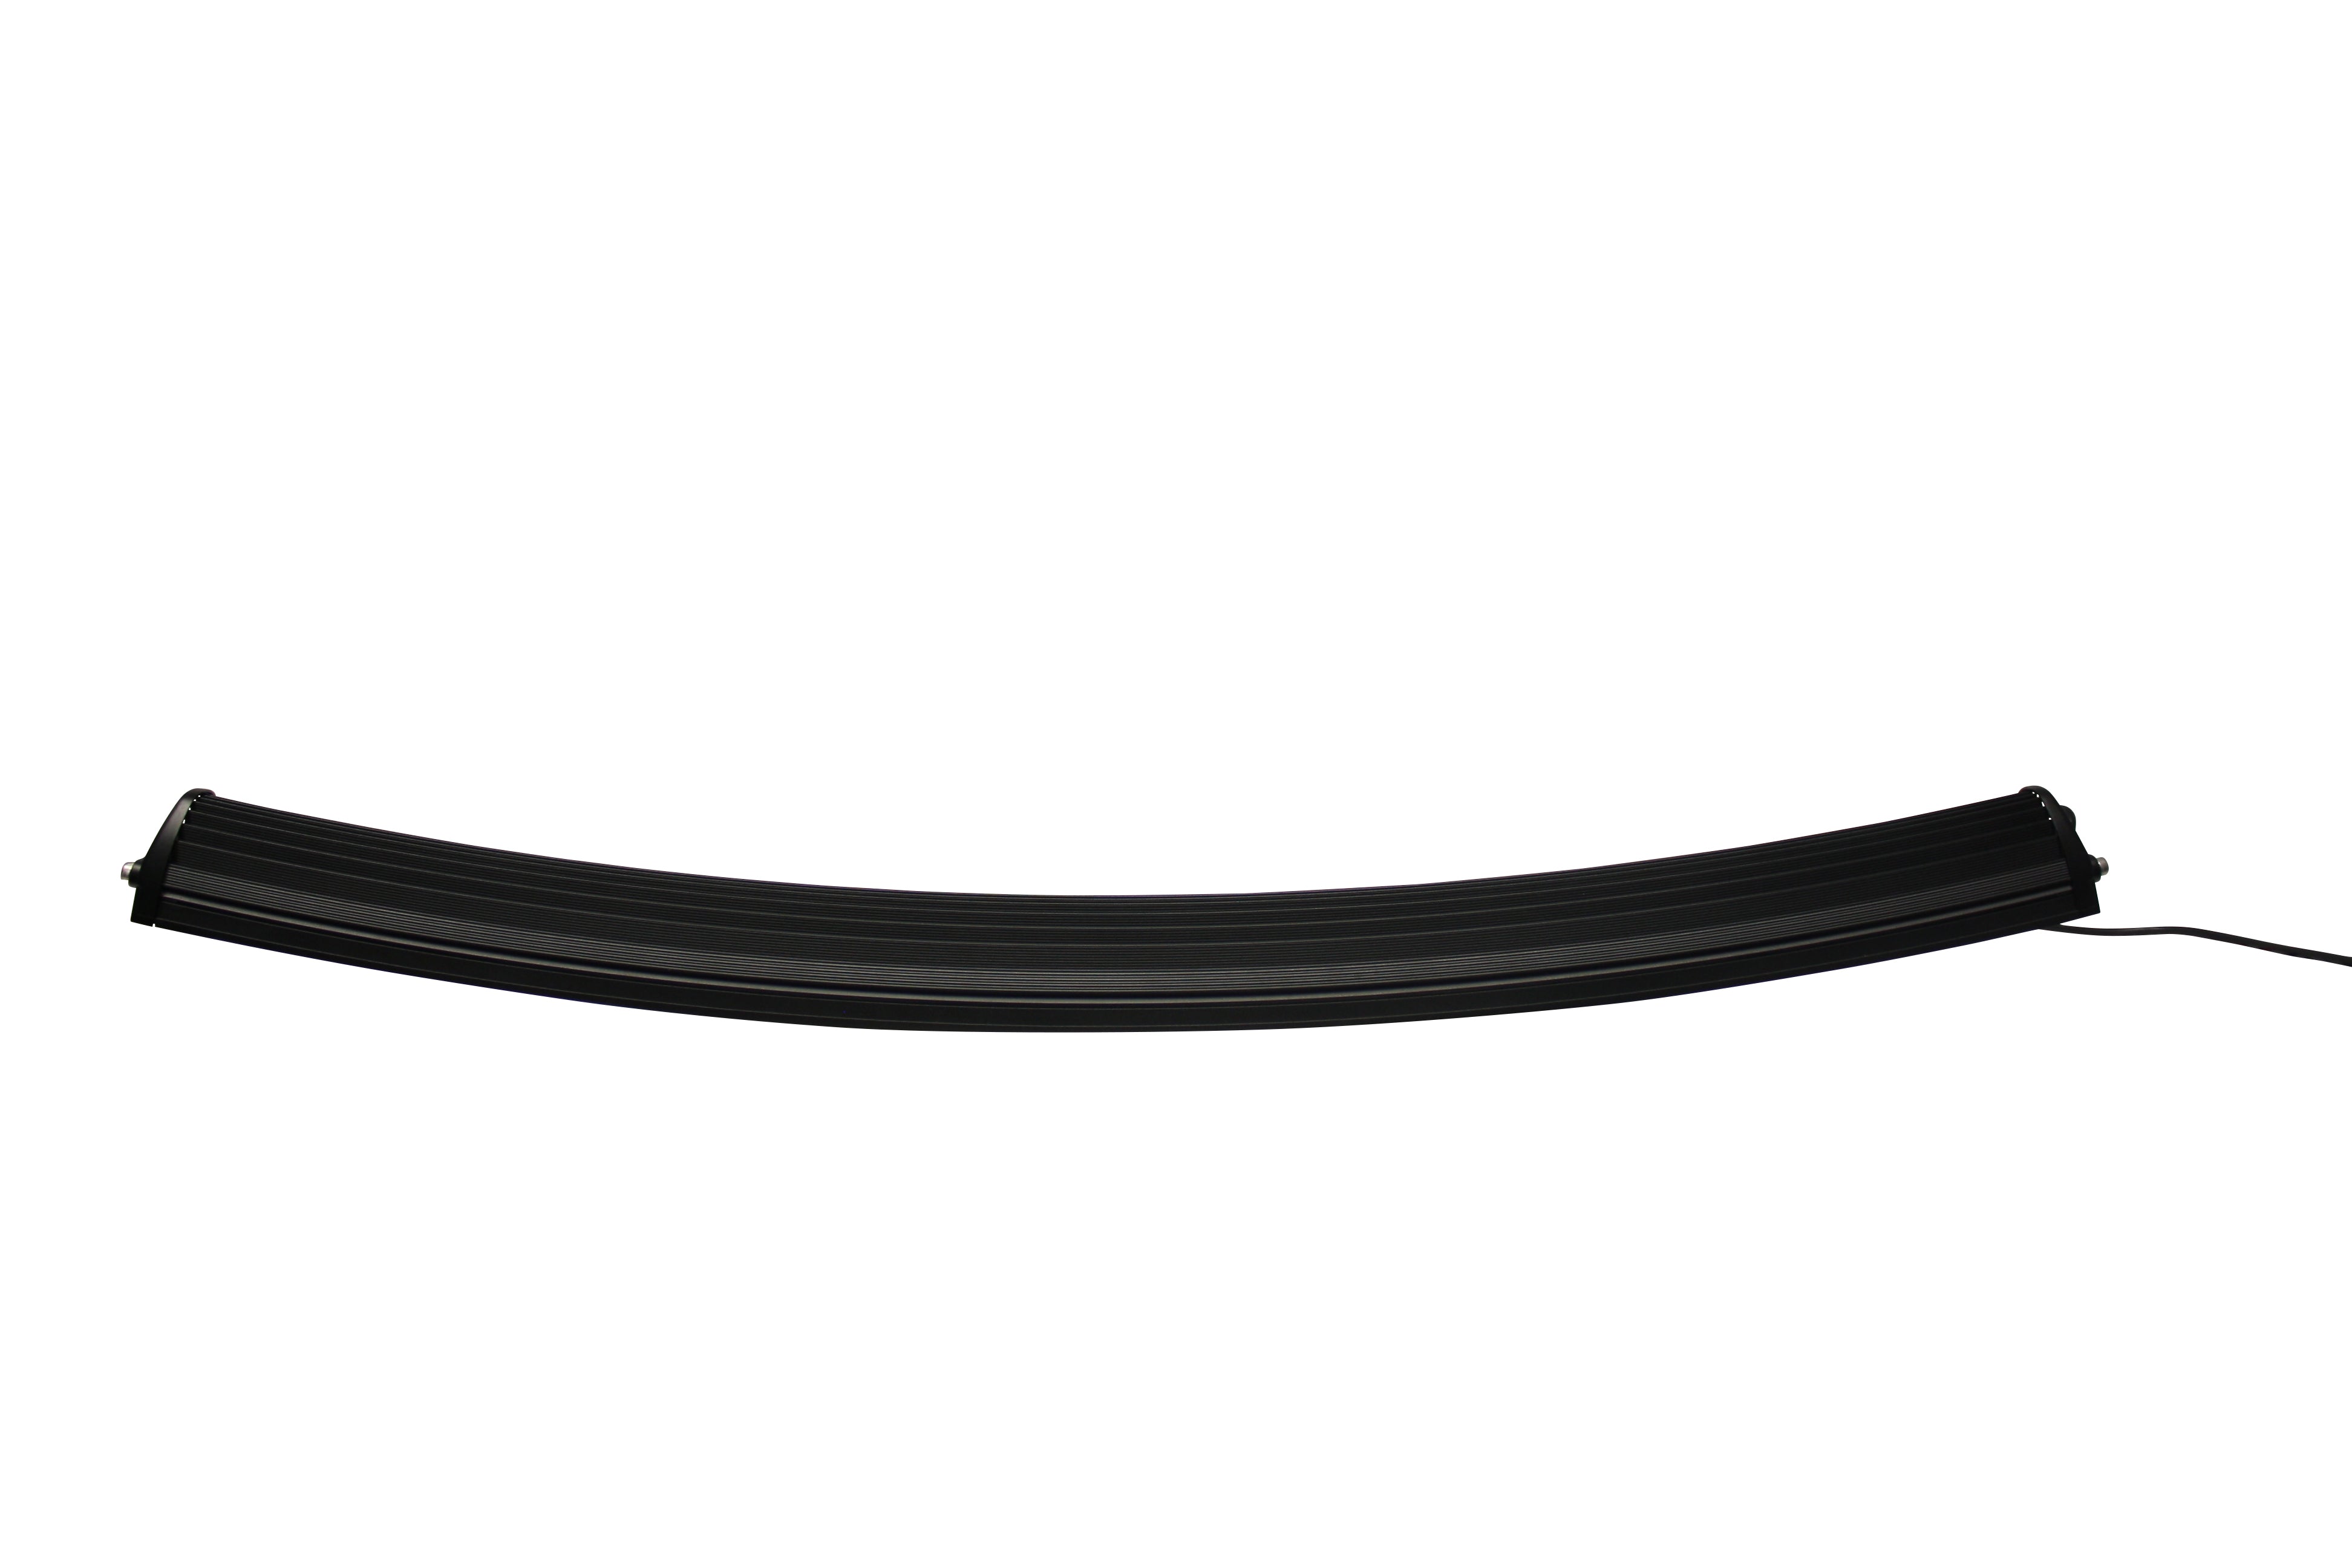 SpeedDemon 50" Curved Dual Row Light Bar - DRCX50 (Black Ops)